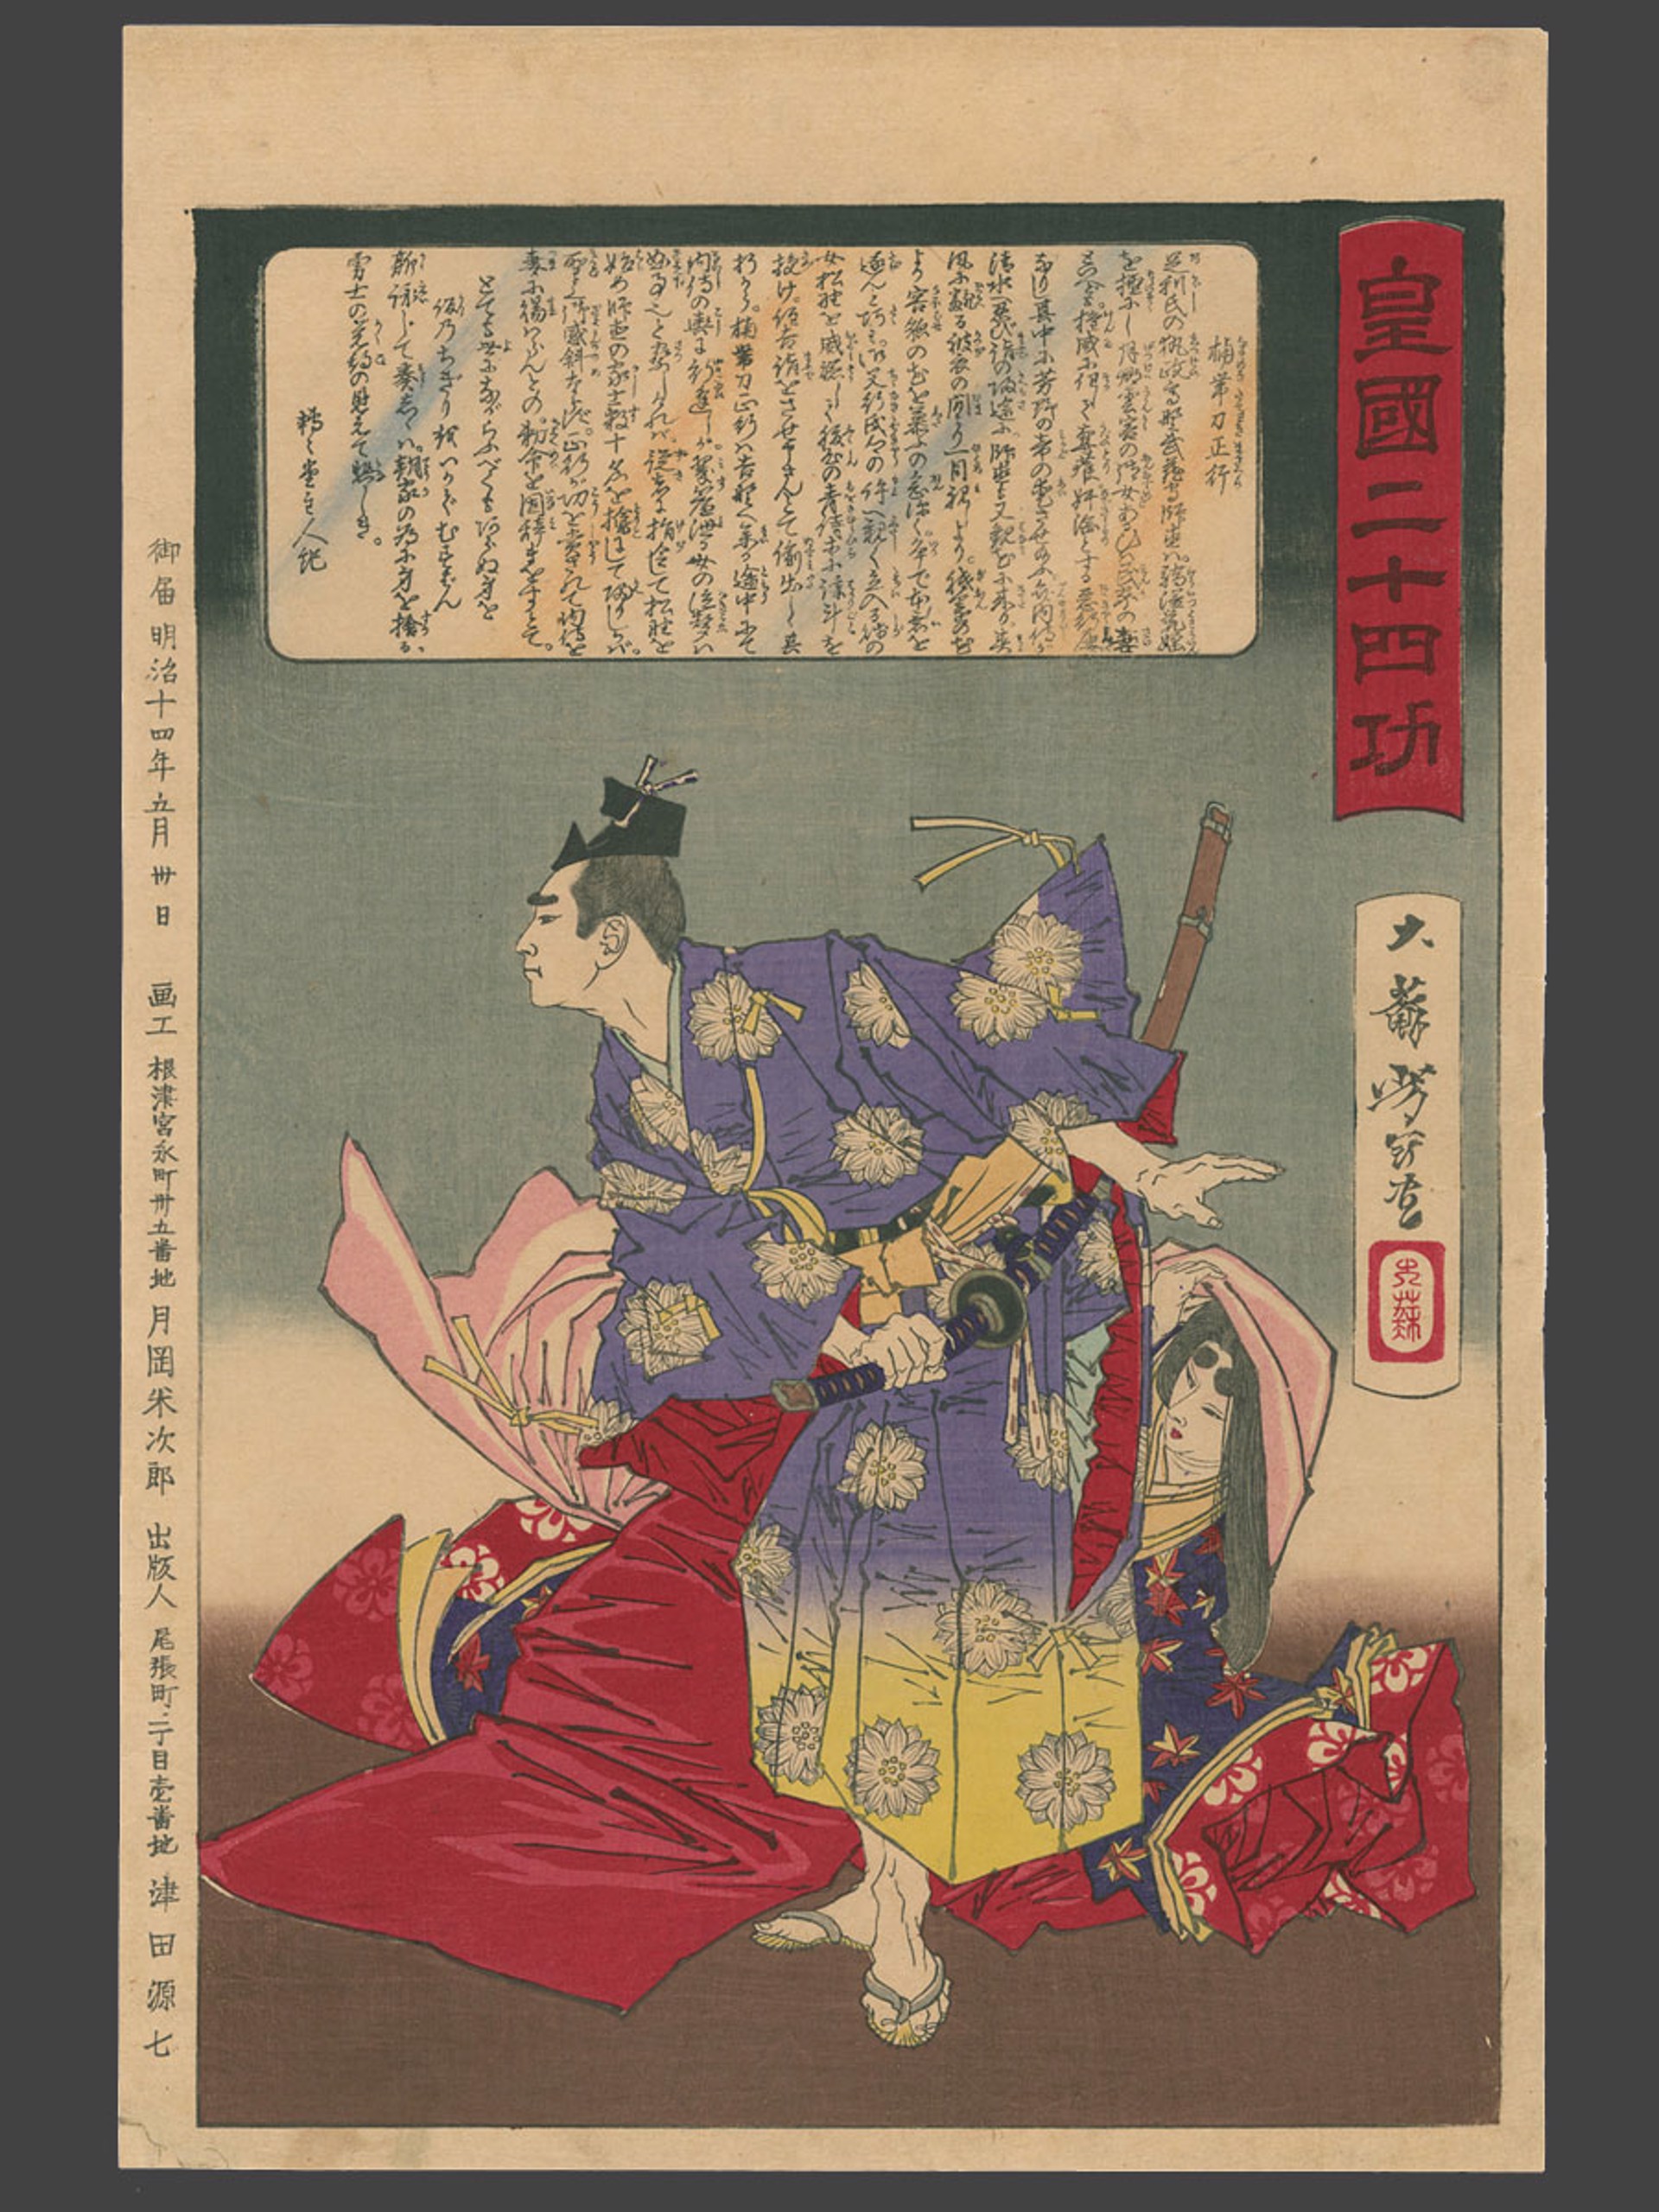 Kusunoki Tatewaka Masatsura Rescuing Ben no Naishi 24 Accomplishments in Imperial Japan by Yoshitoshi